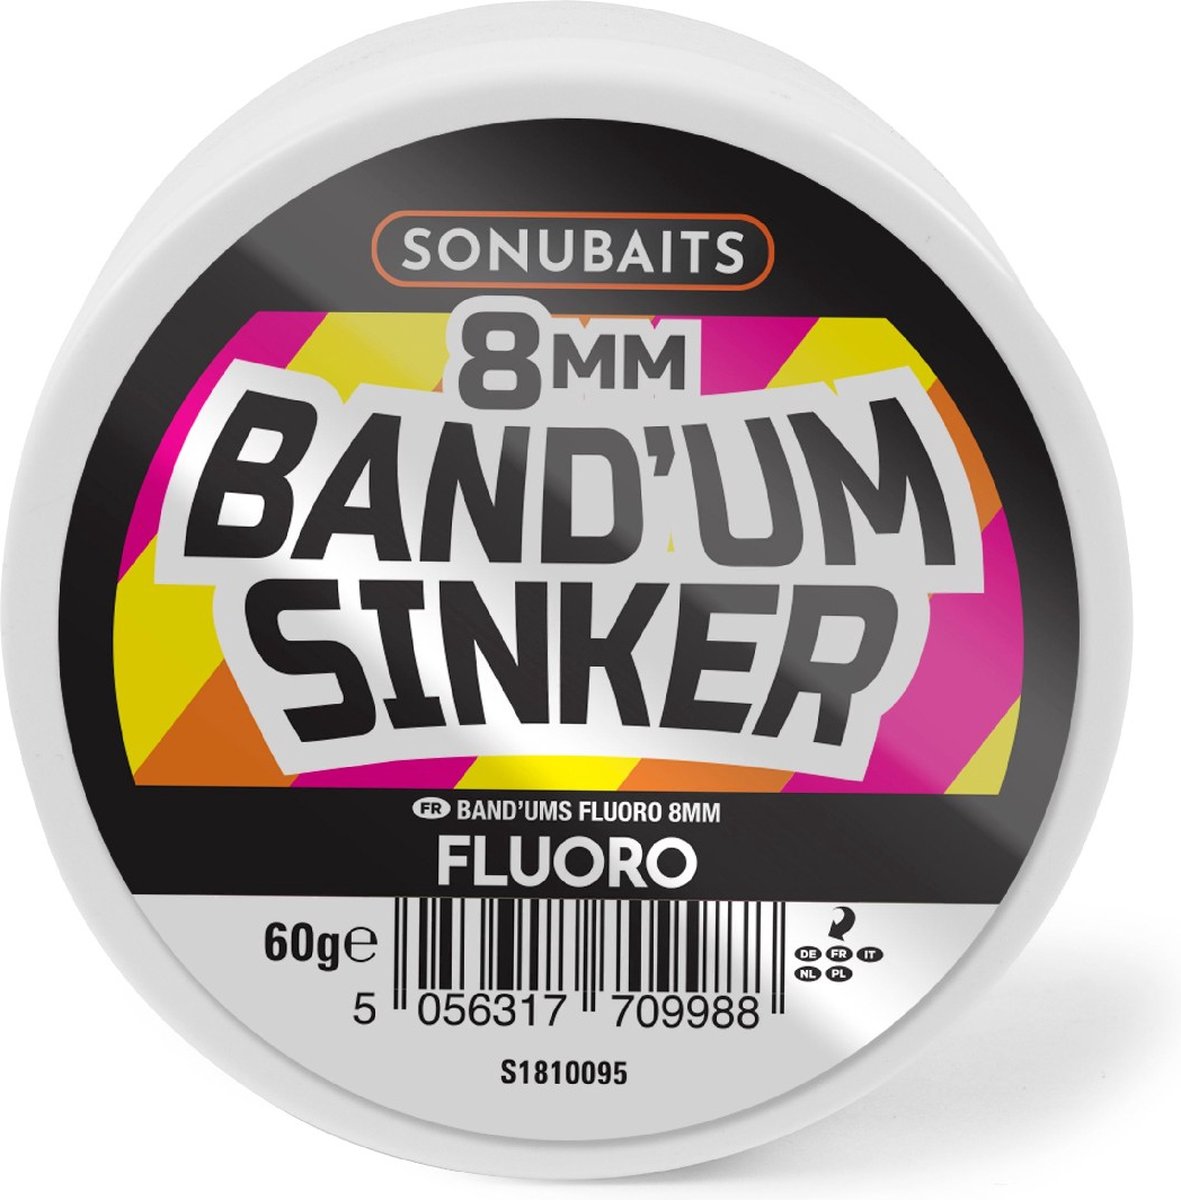 Sonubaits Bandum Sinker Fluoro 6mm | Boilies